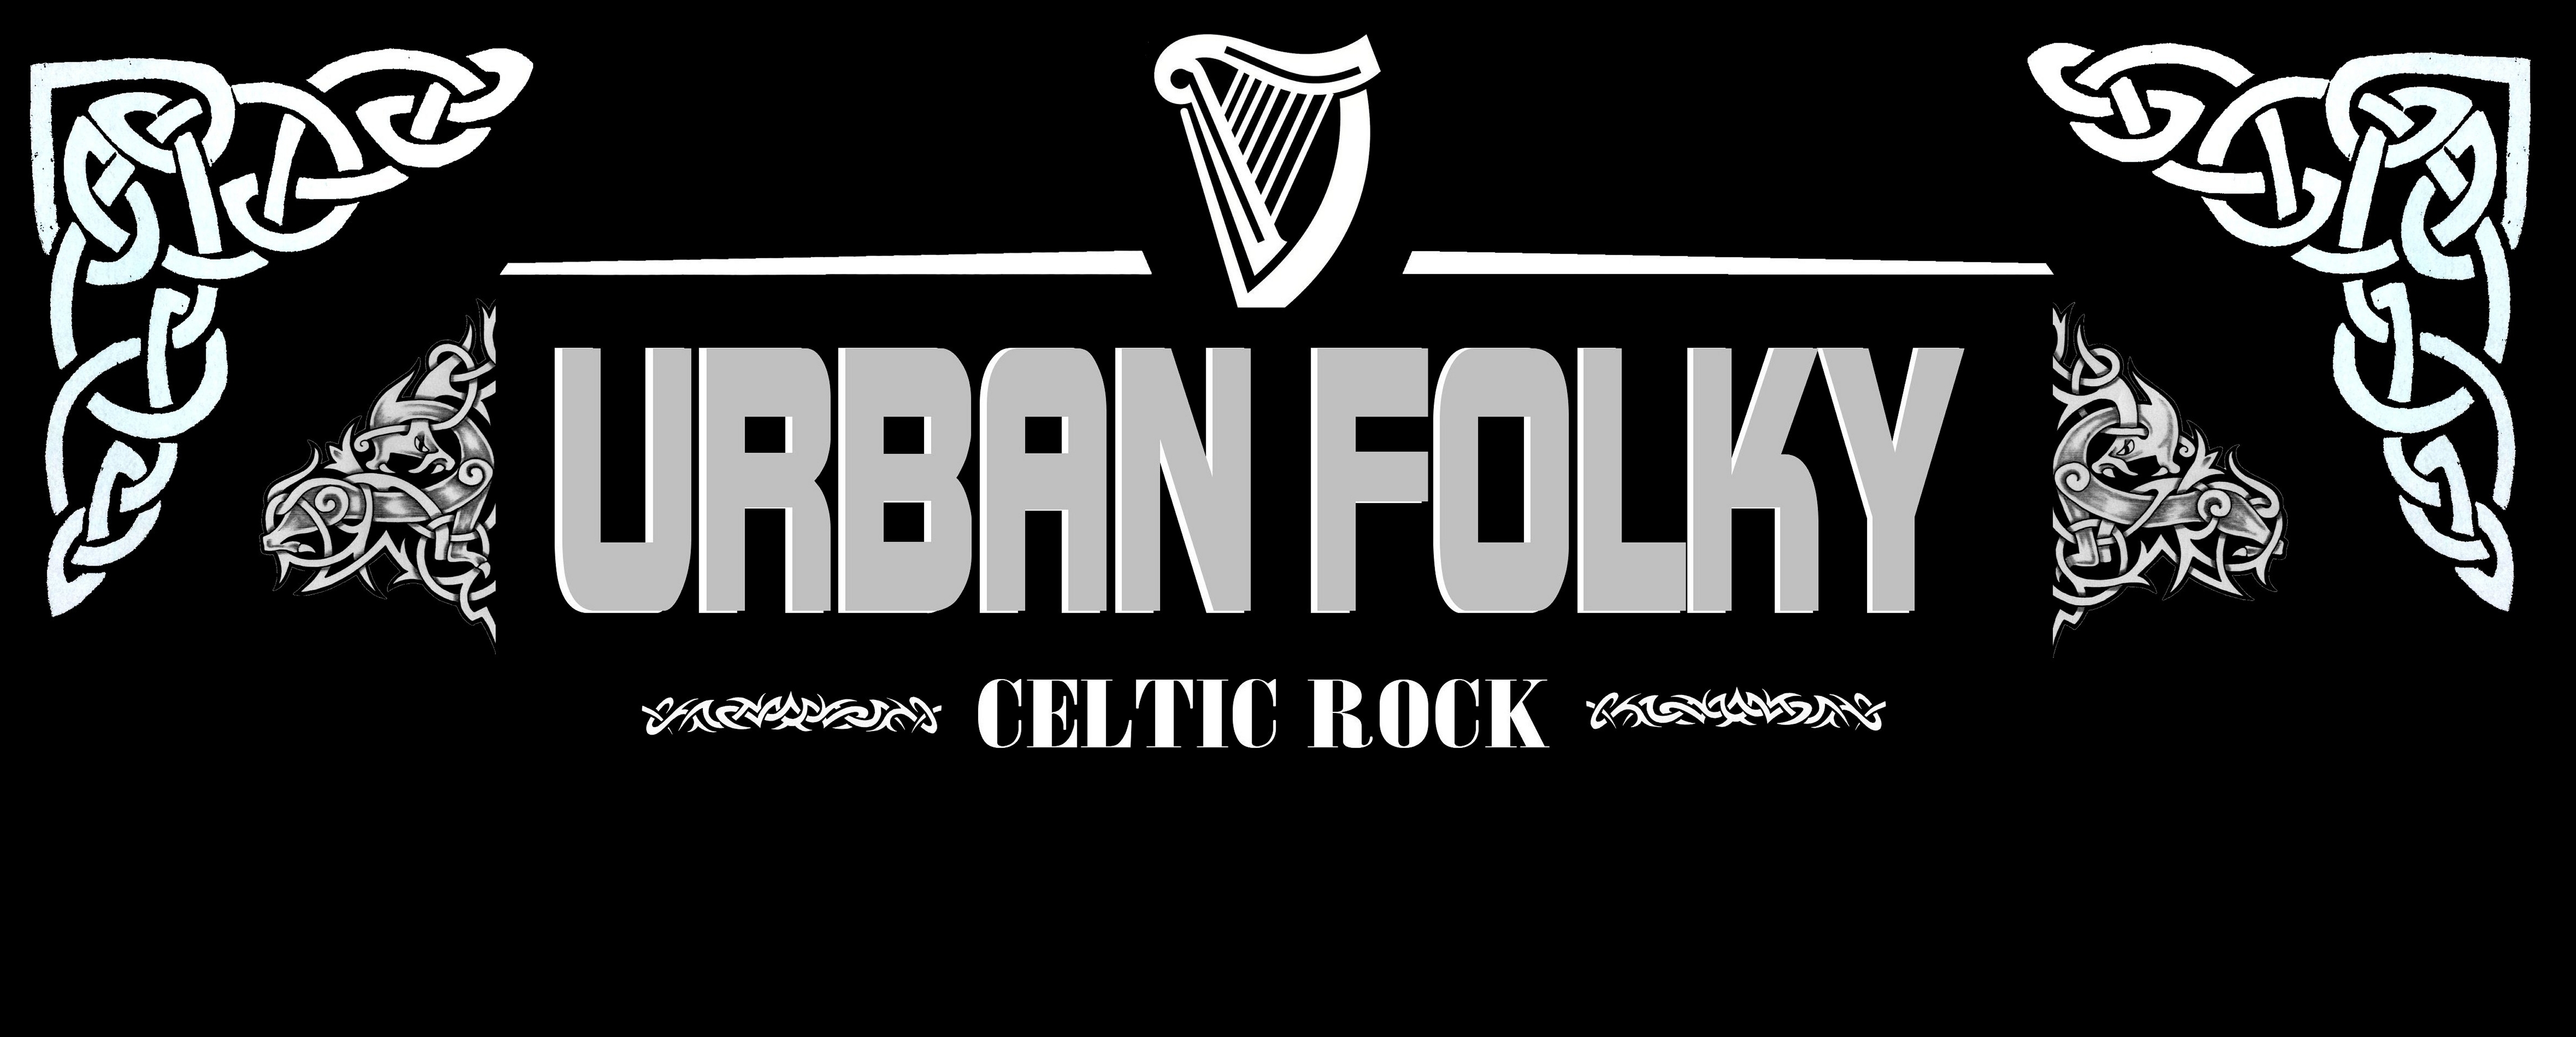 Urban Folky celtic music